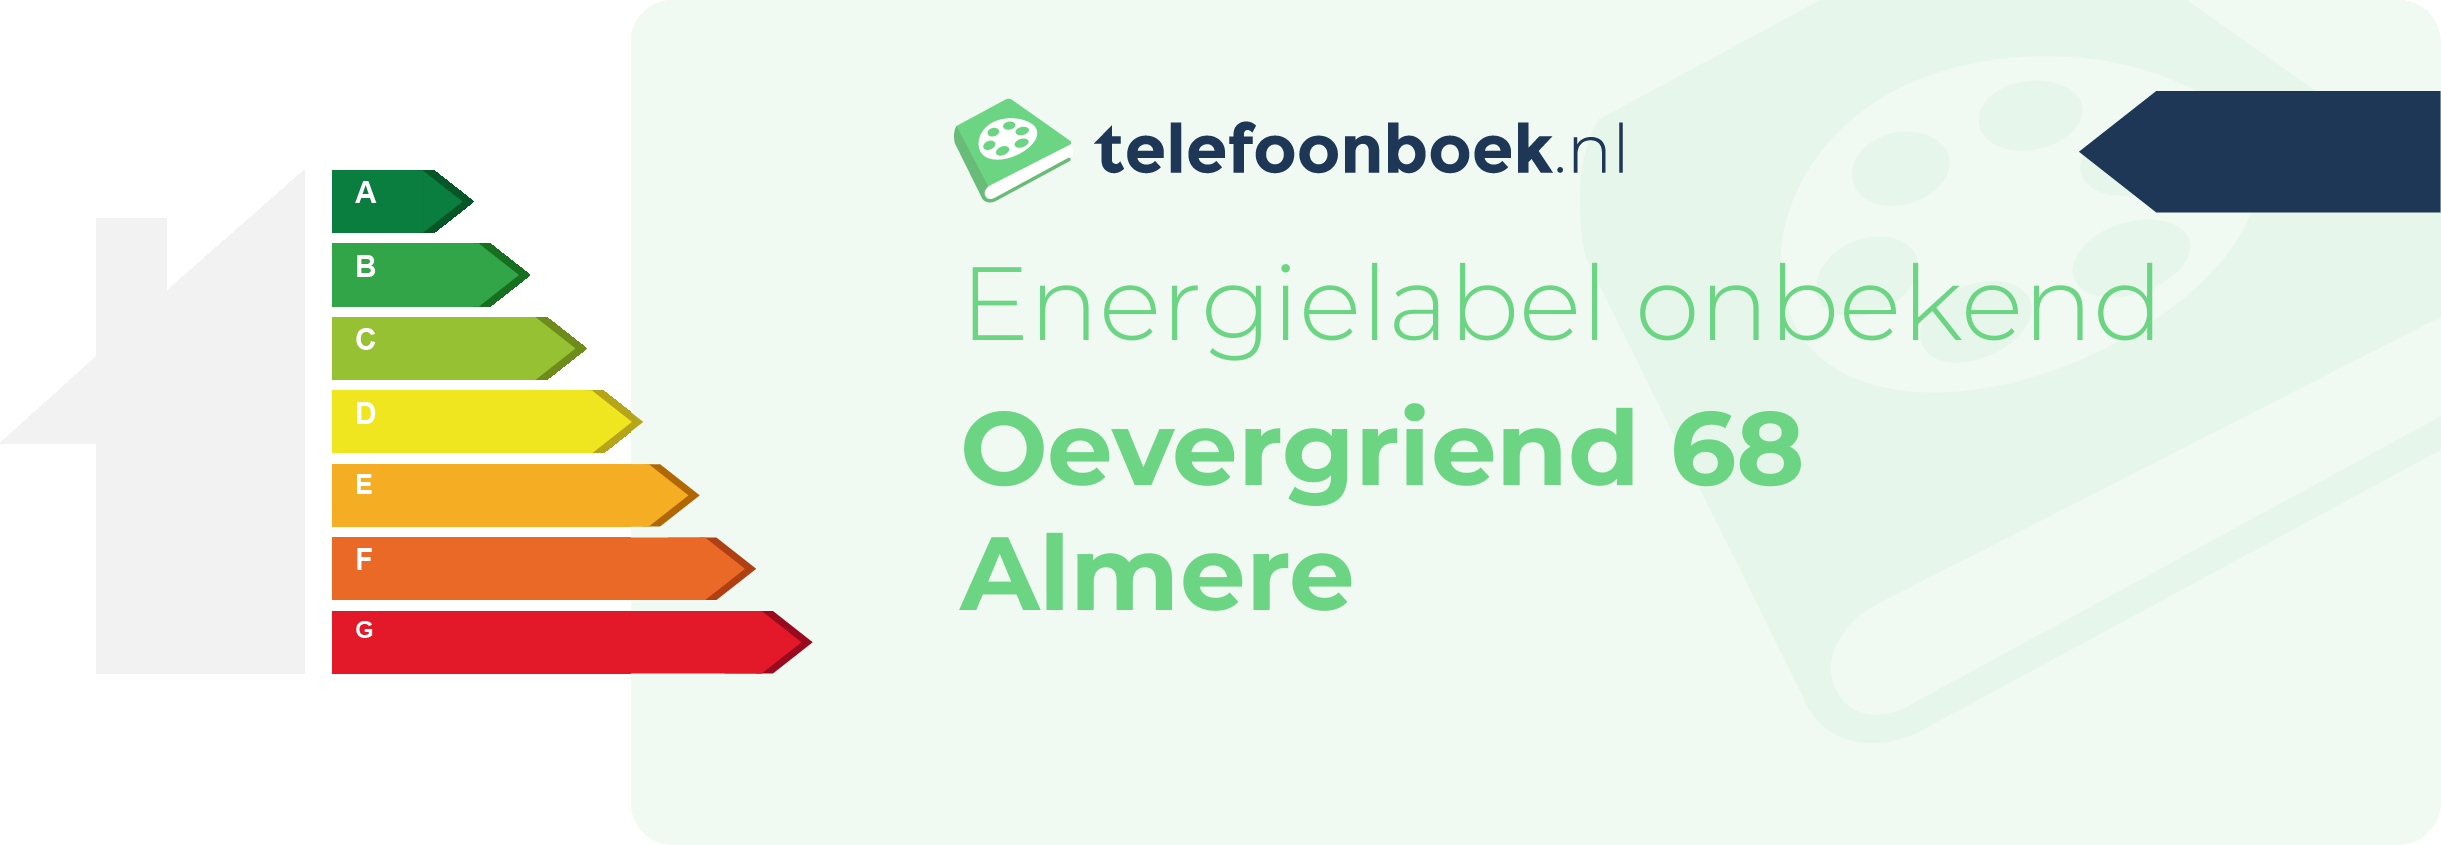 Energielabel Oevergriend 68 Almere